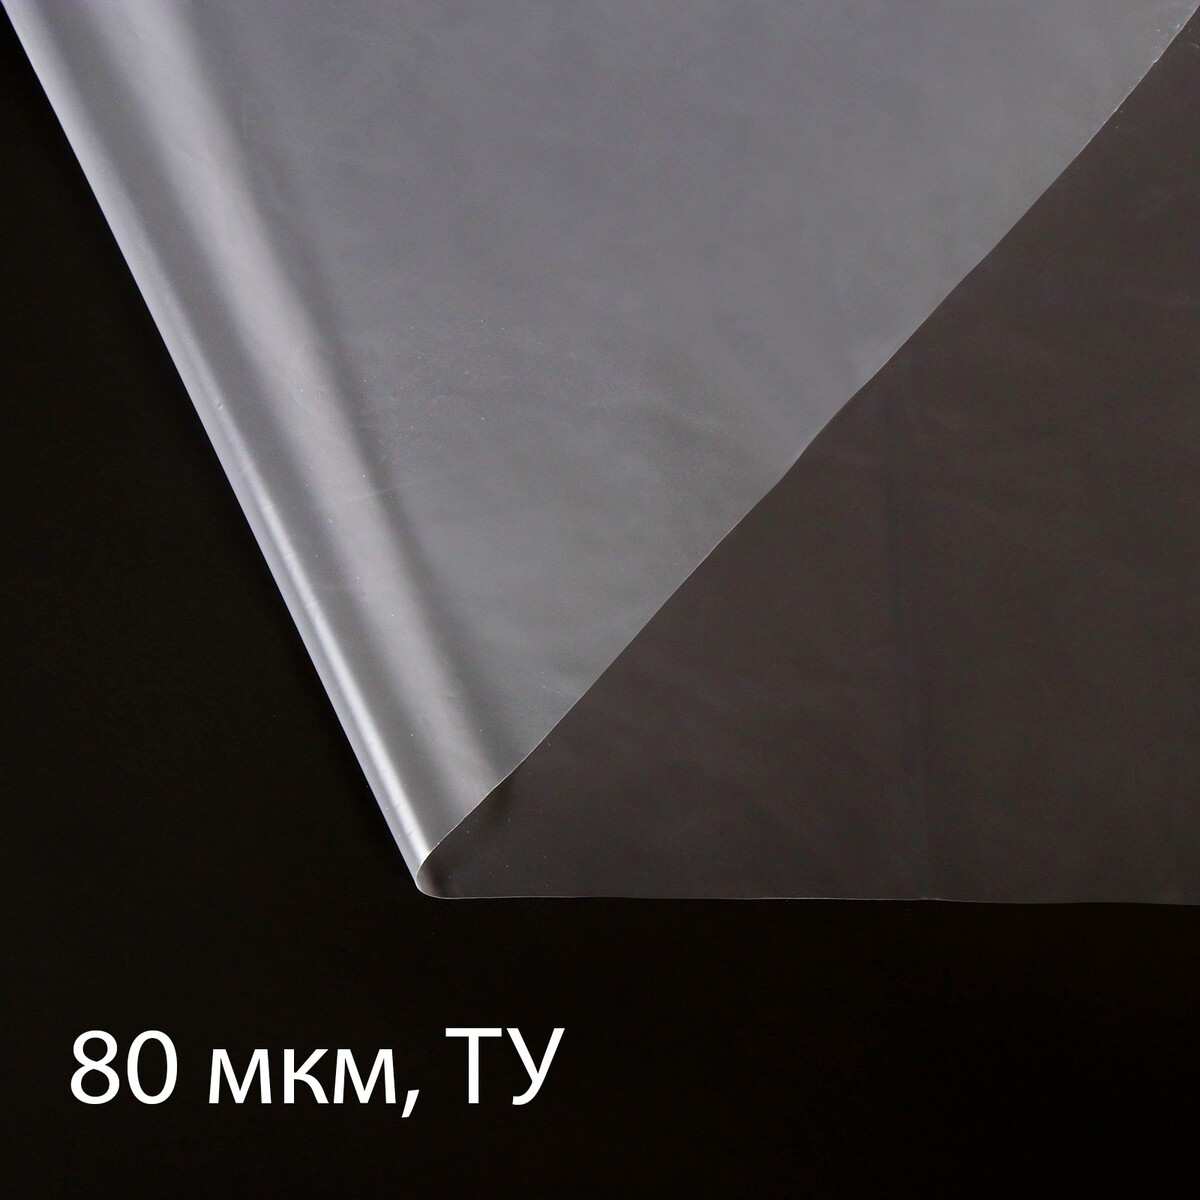 Пленка полиэтиленовая 80 мкм, прозрачная, длина 5 м, ширина 3 м, рукав (1.5 × 2 м), эконом 50% пленка полиэтиленовая прозрачная 60 мкм 3 × 5 м рукав 1 5 м × 2 эконом 50 %